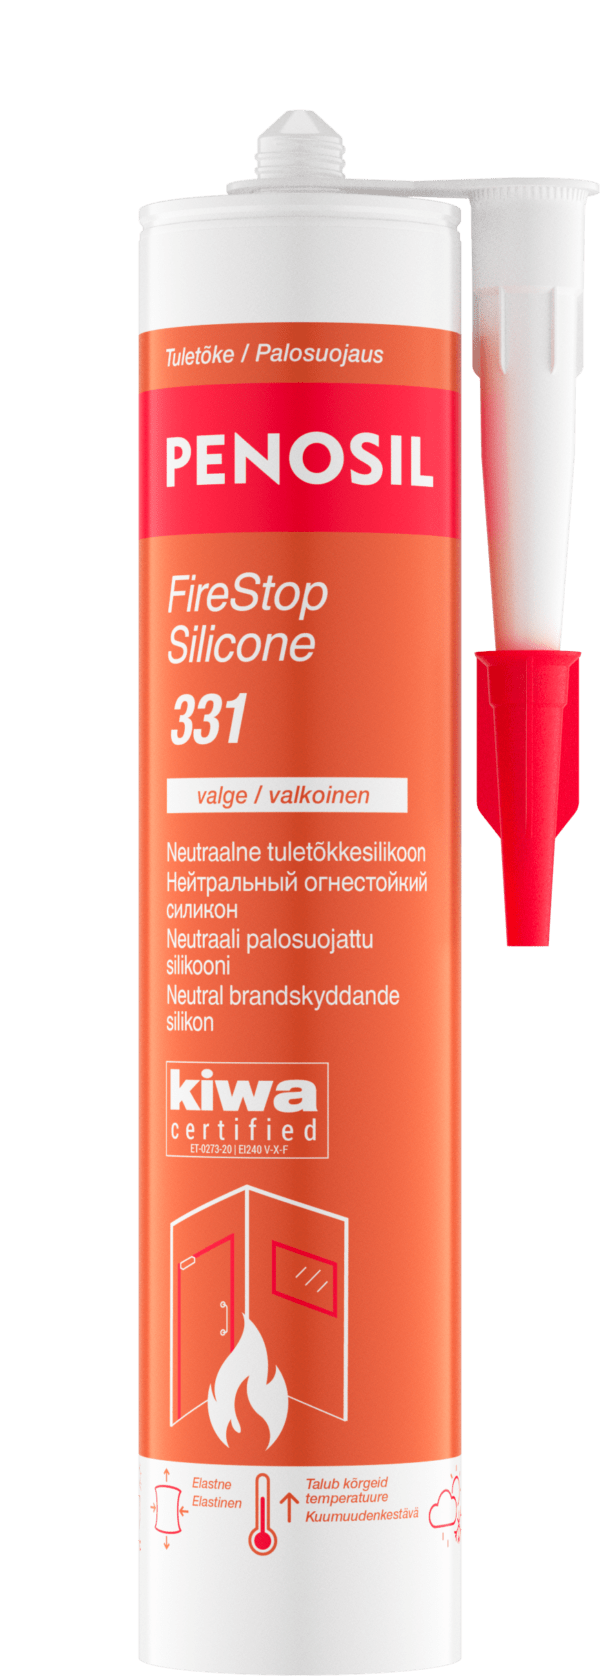 Penosil Firestop_Silicone_331_EE_FI